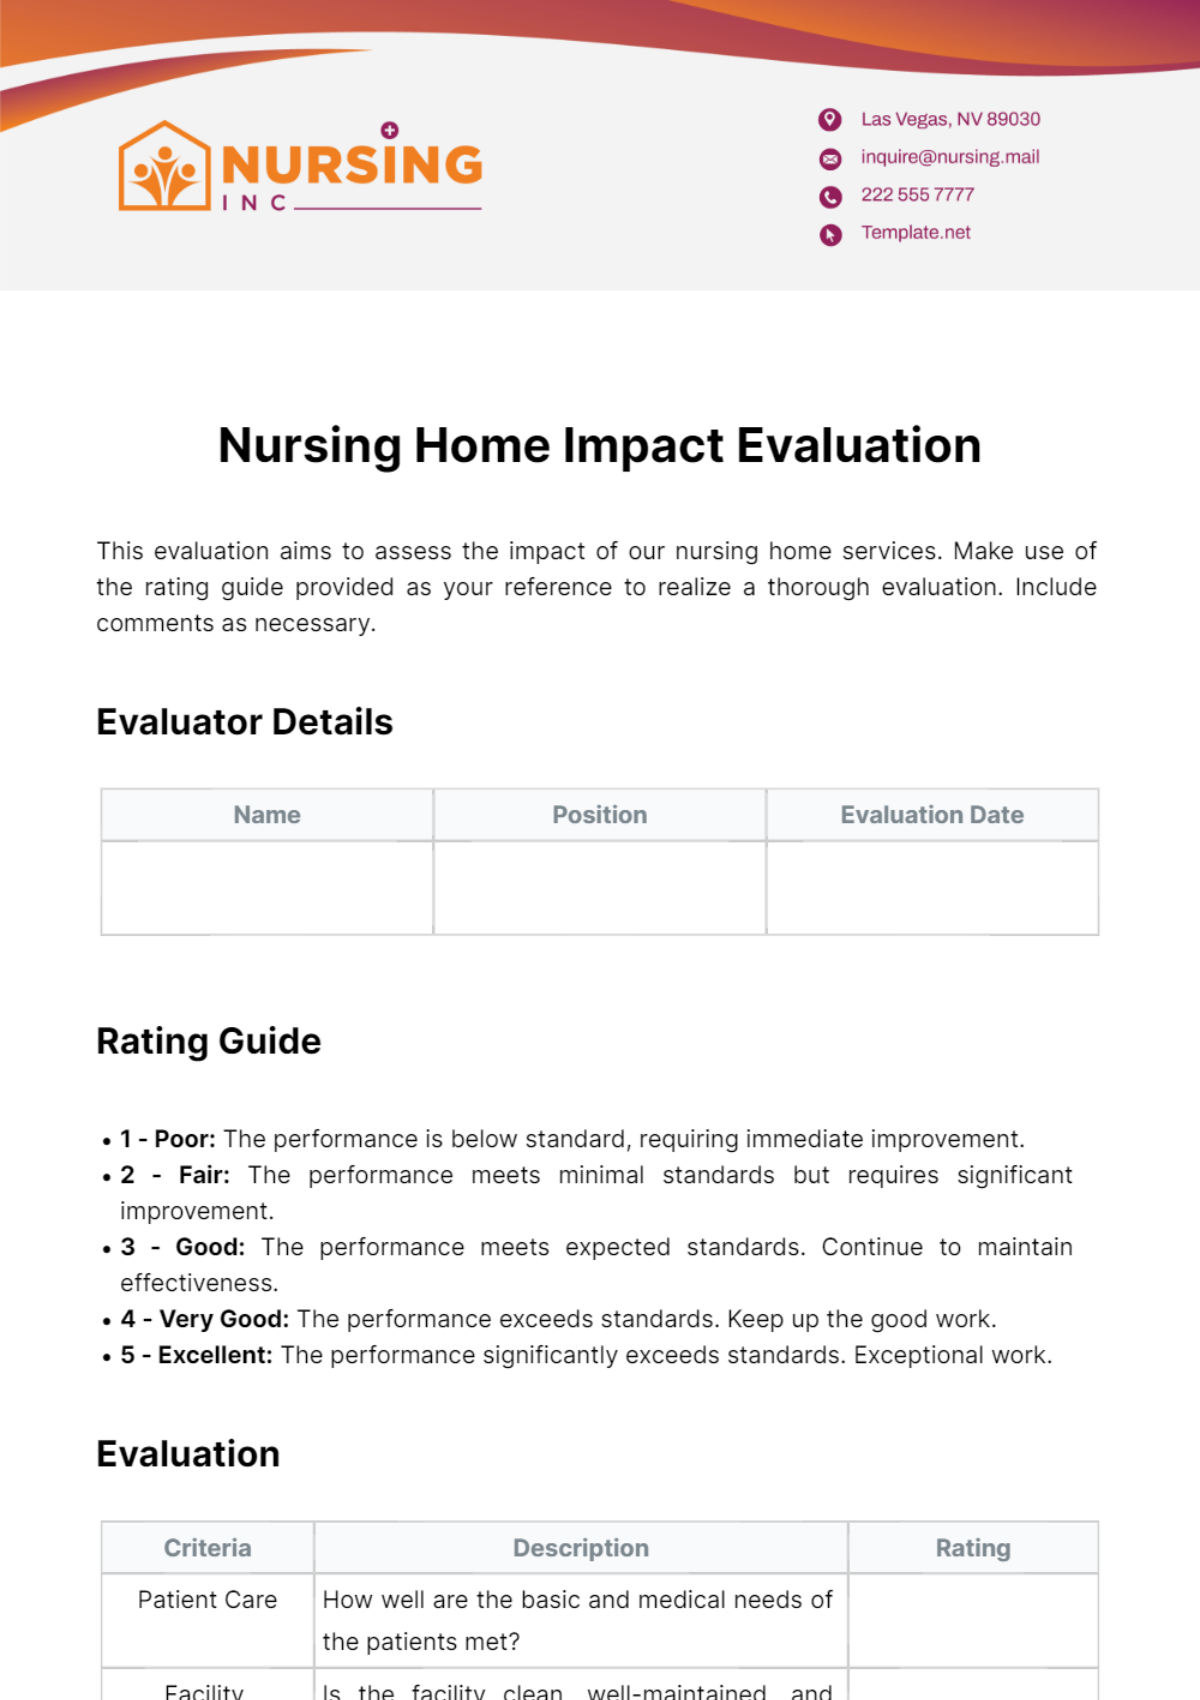 Nursing Home Impact Evaluation Template